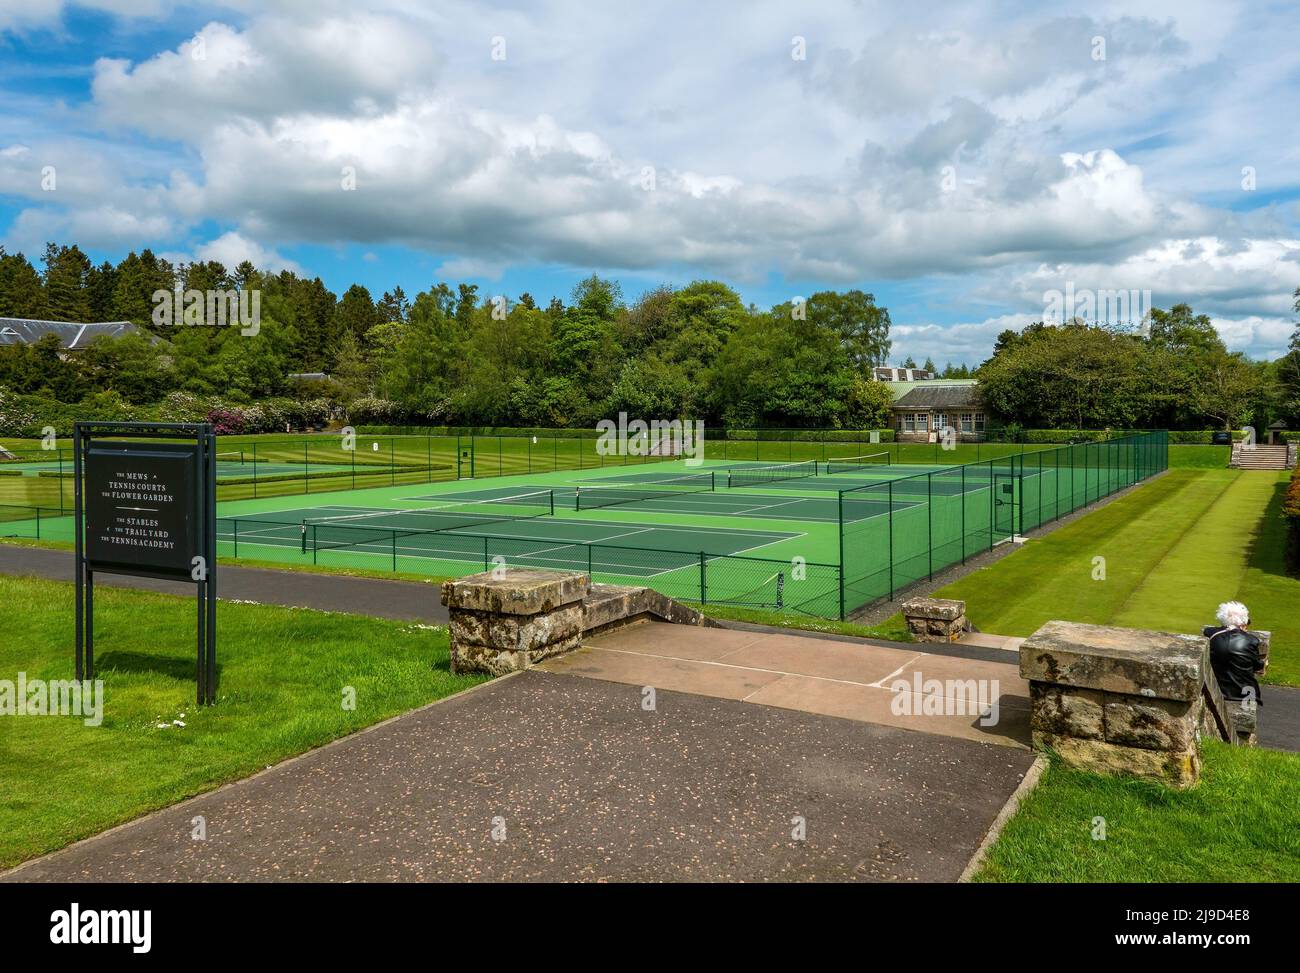 Tennis Courts at The Gleneagles Hotel, Perthshire, Scotland, UK Stock Photo